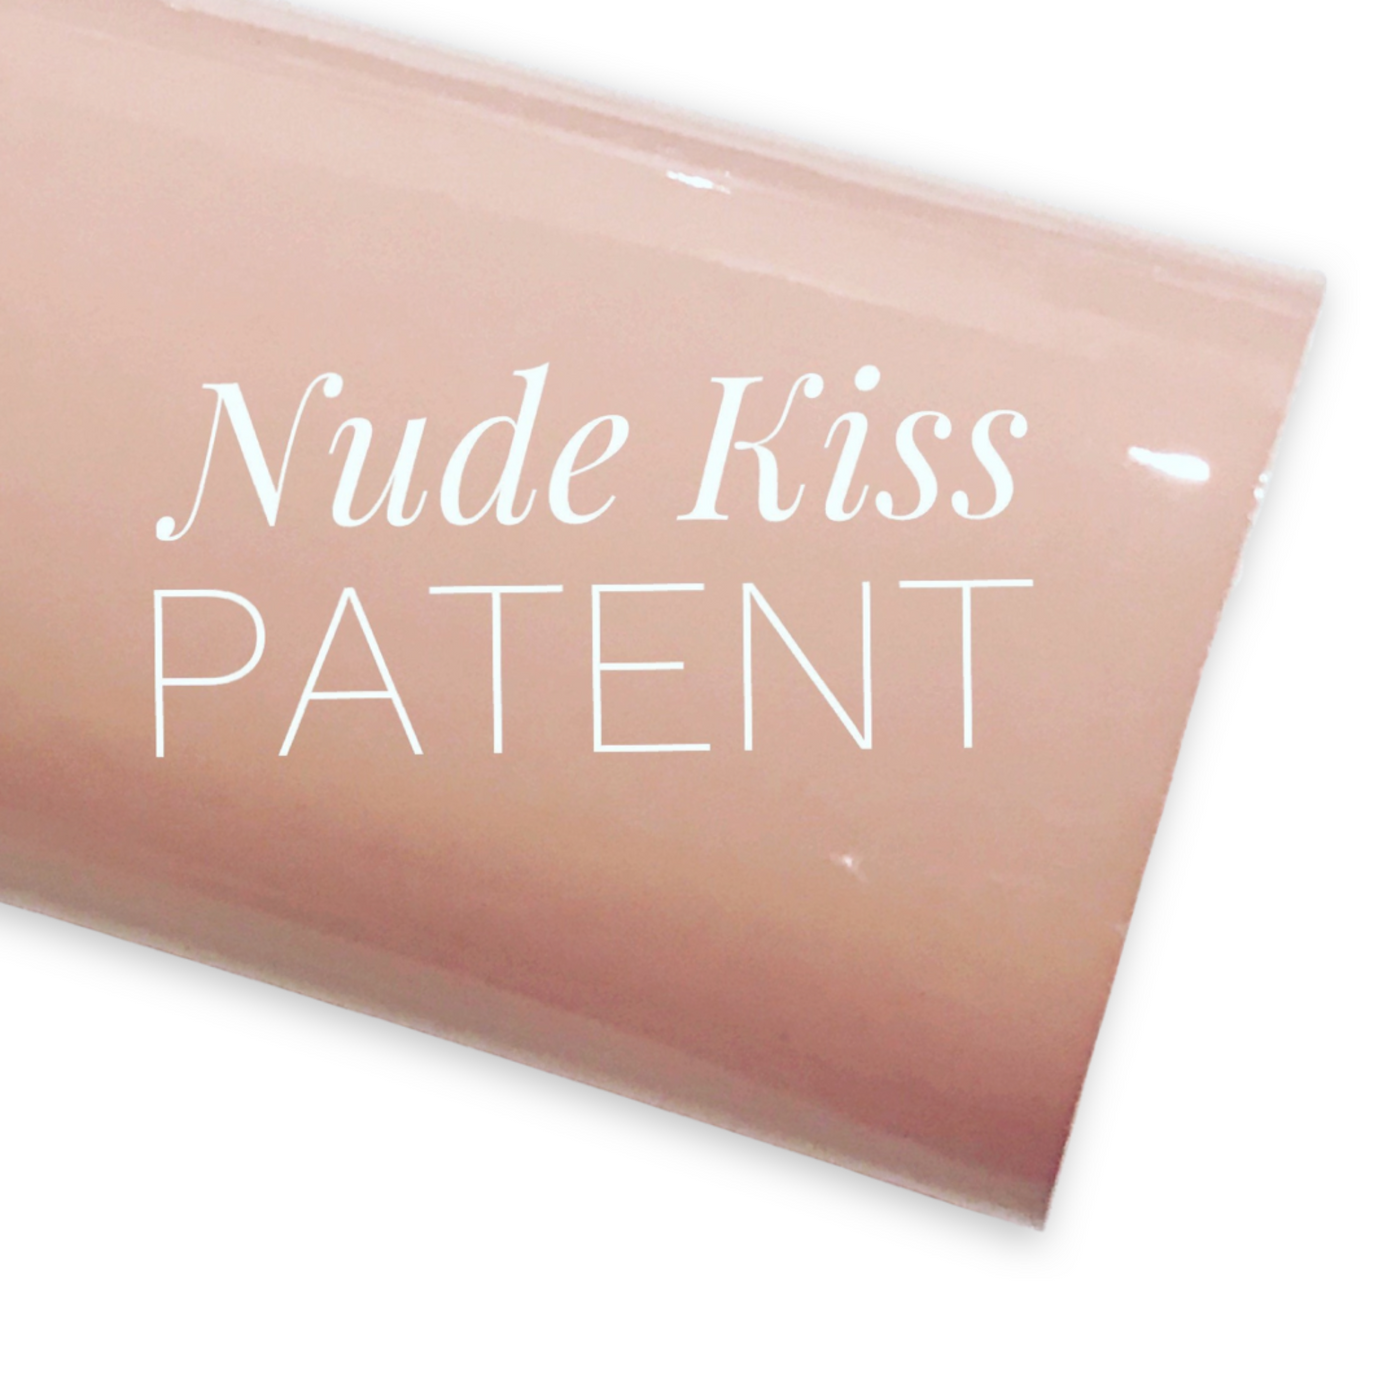 Nude Kiss Patent Leatherette